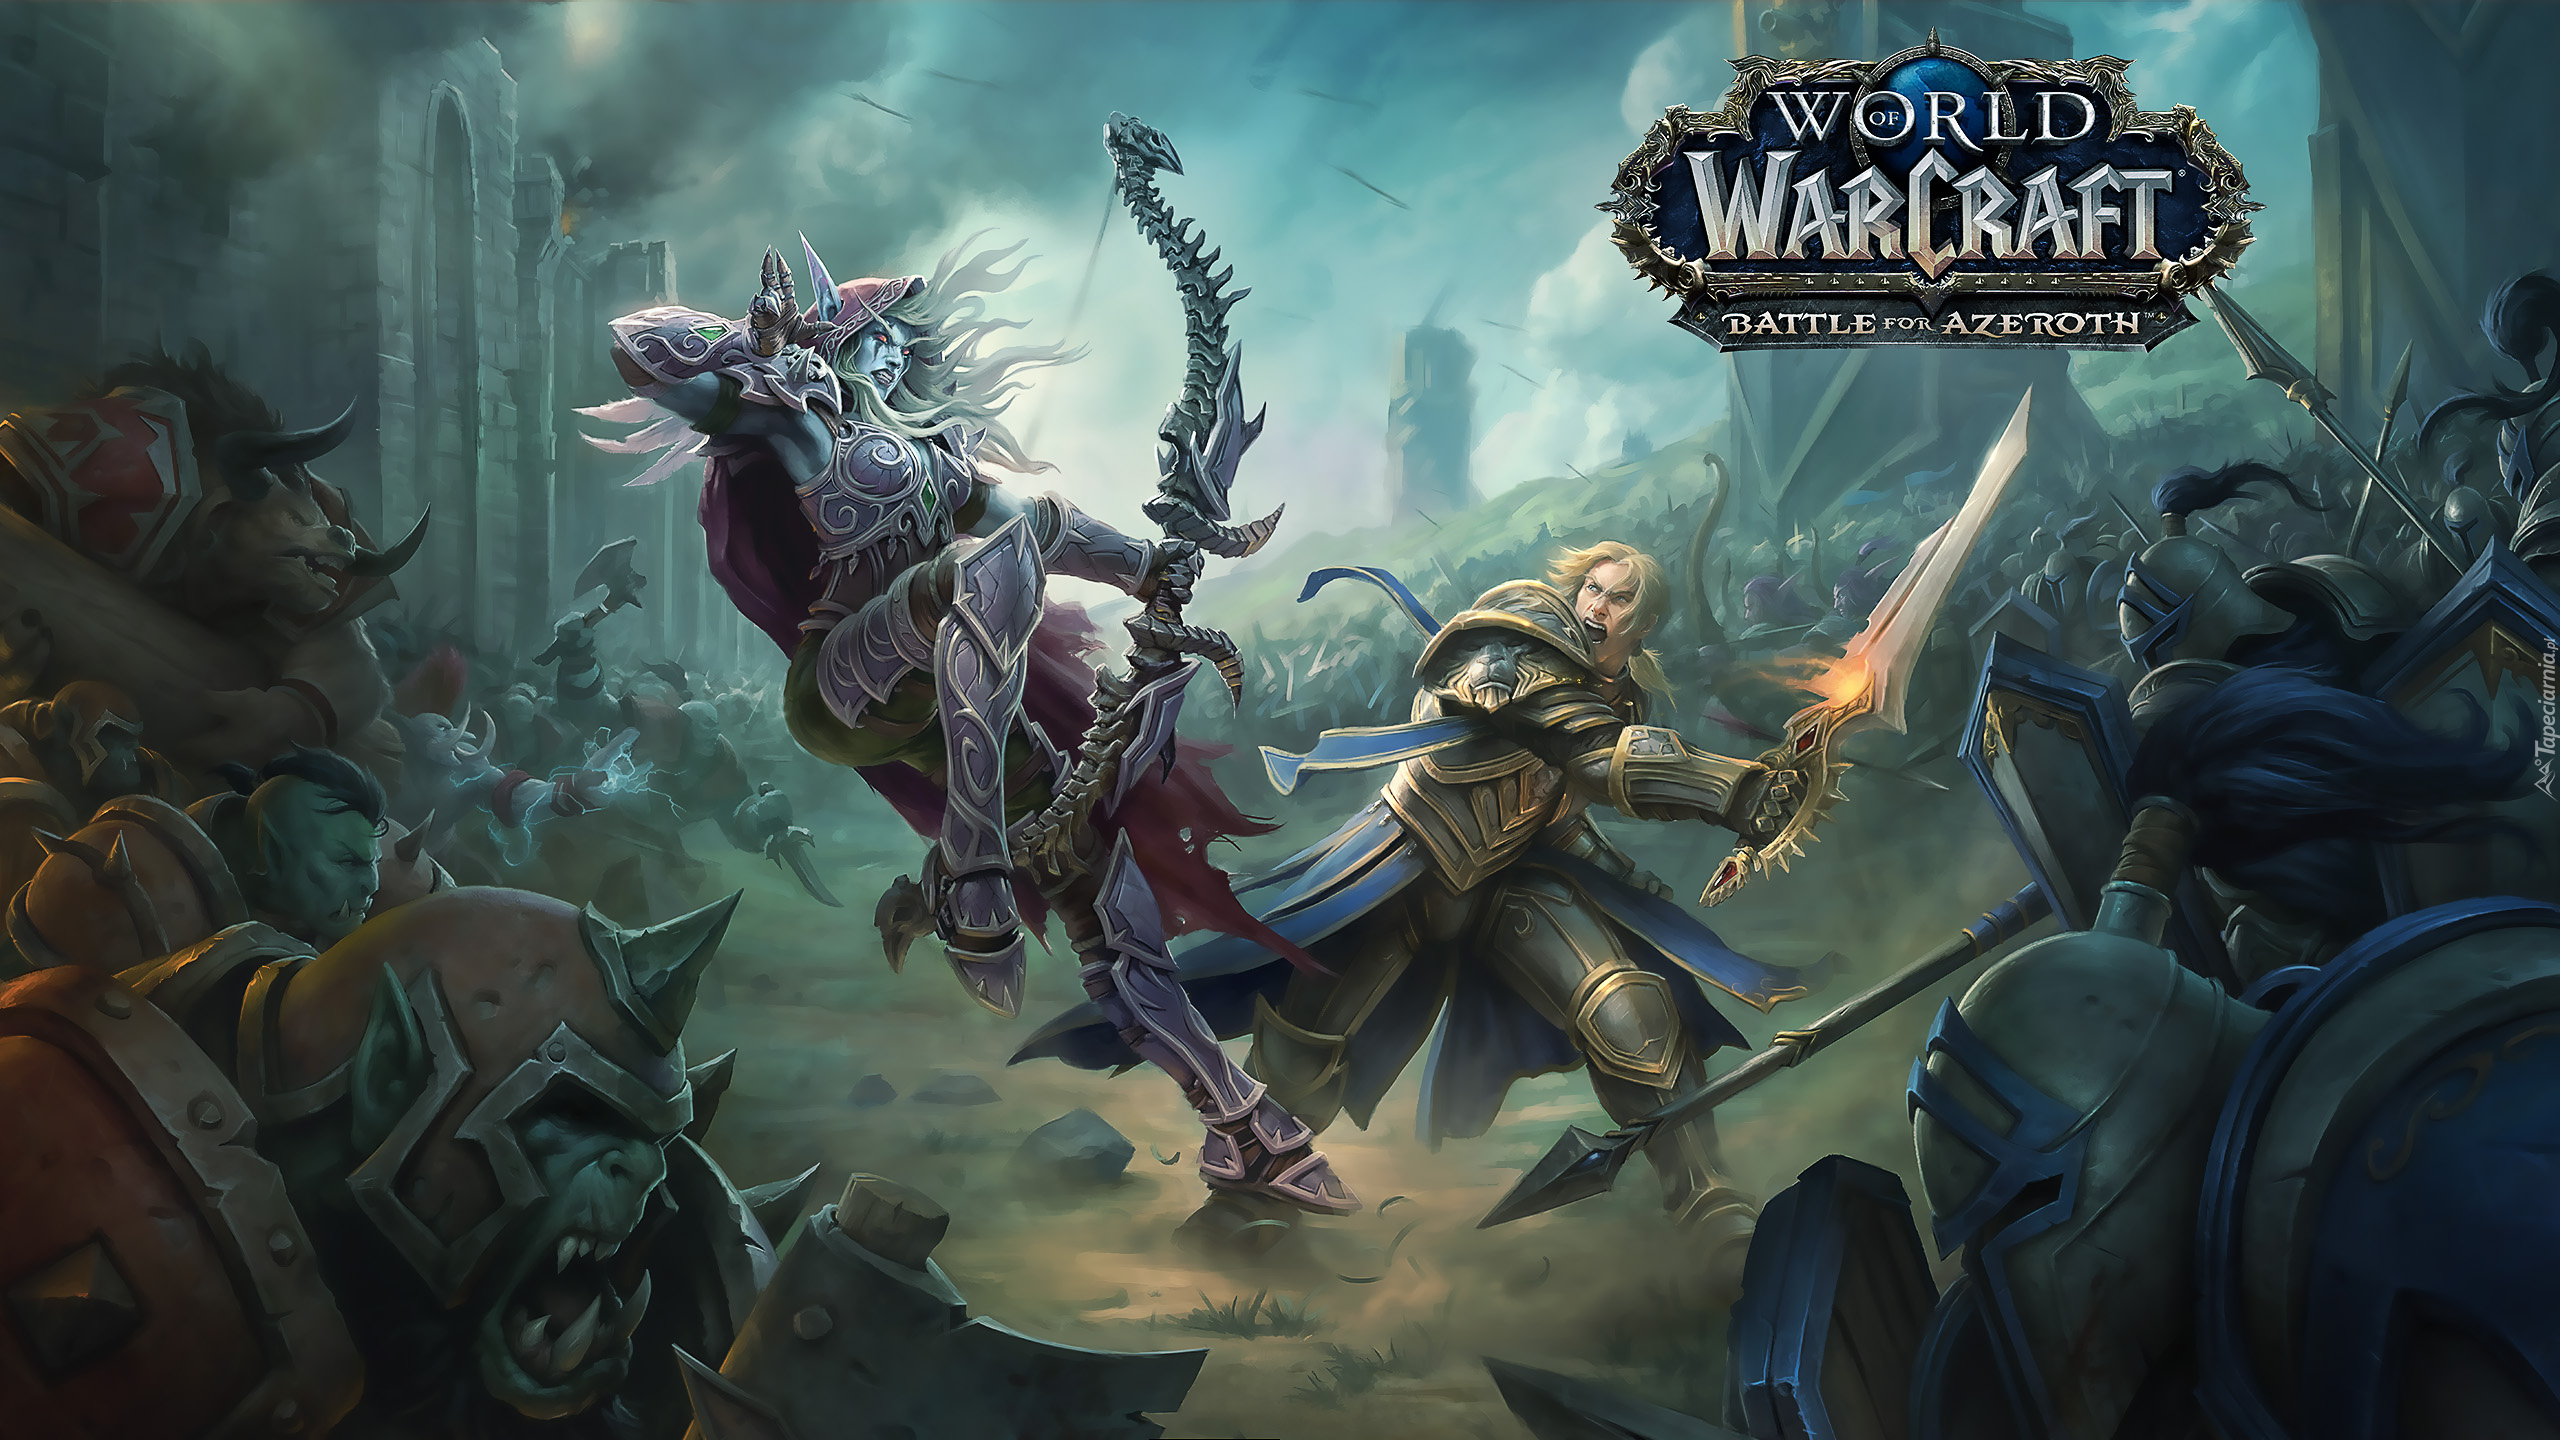 Gra, World of Warcraft Battle for Azeroth, Postacie, Sylvanas Windrunner, Anduin Wrynn, Rycerze, Łuk, Miecz, Walka, Plakat